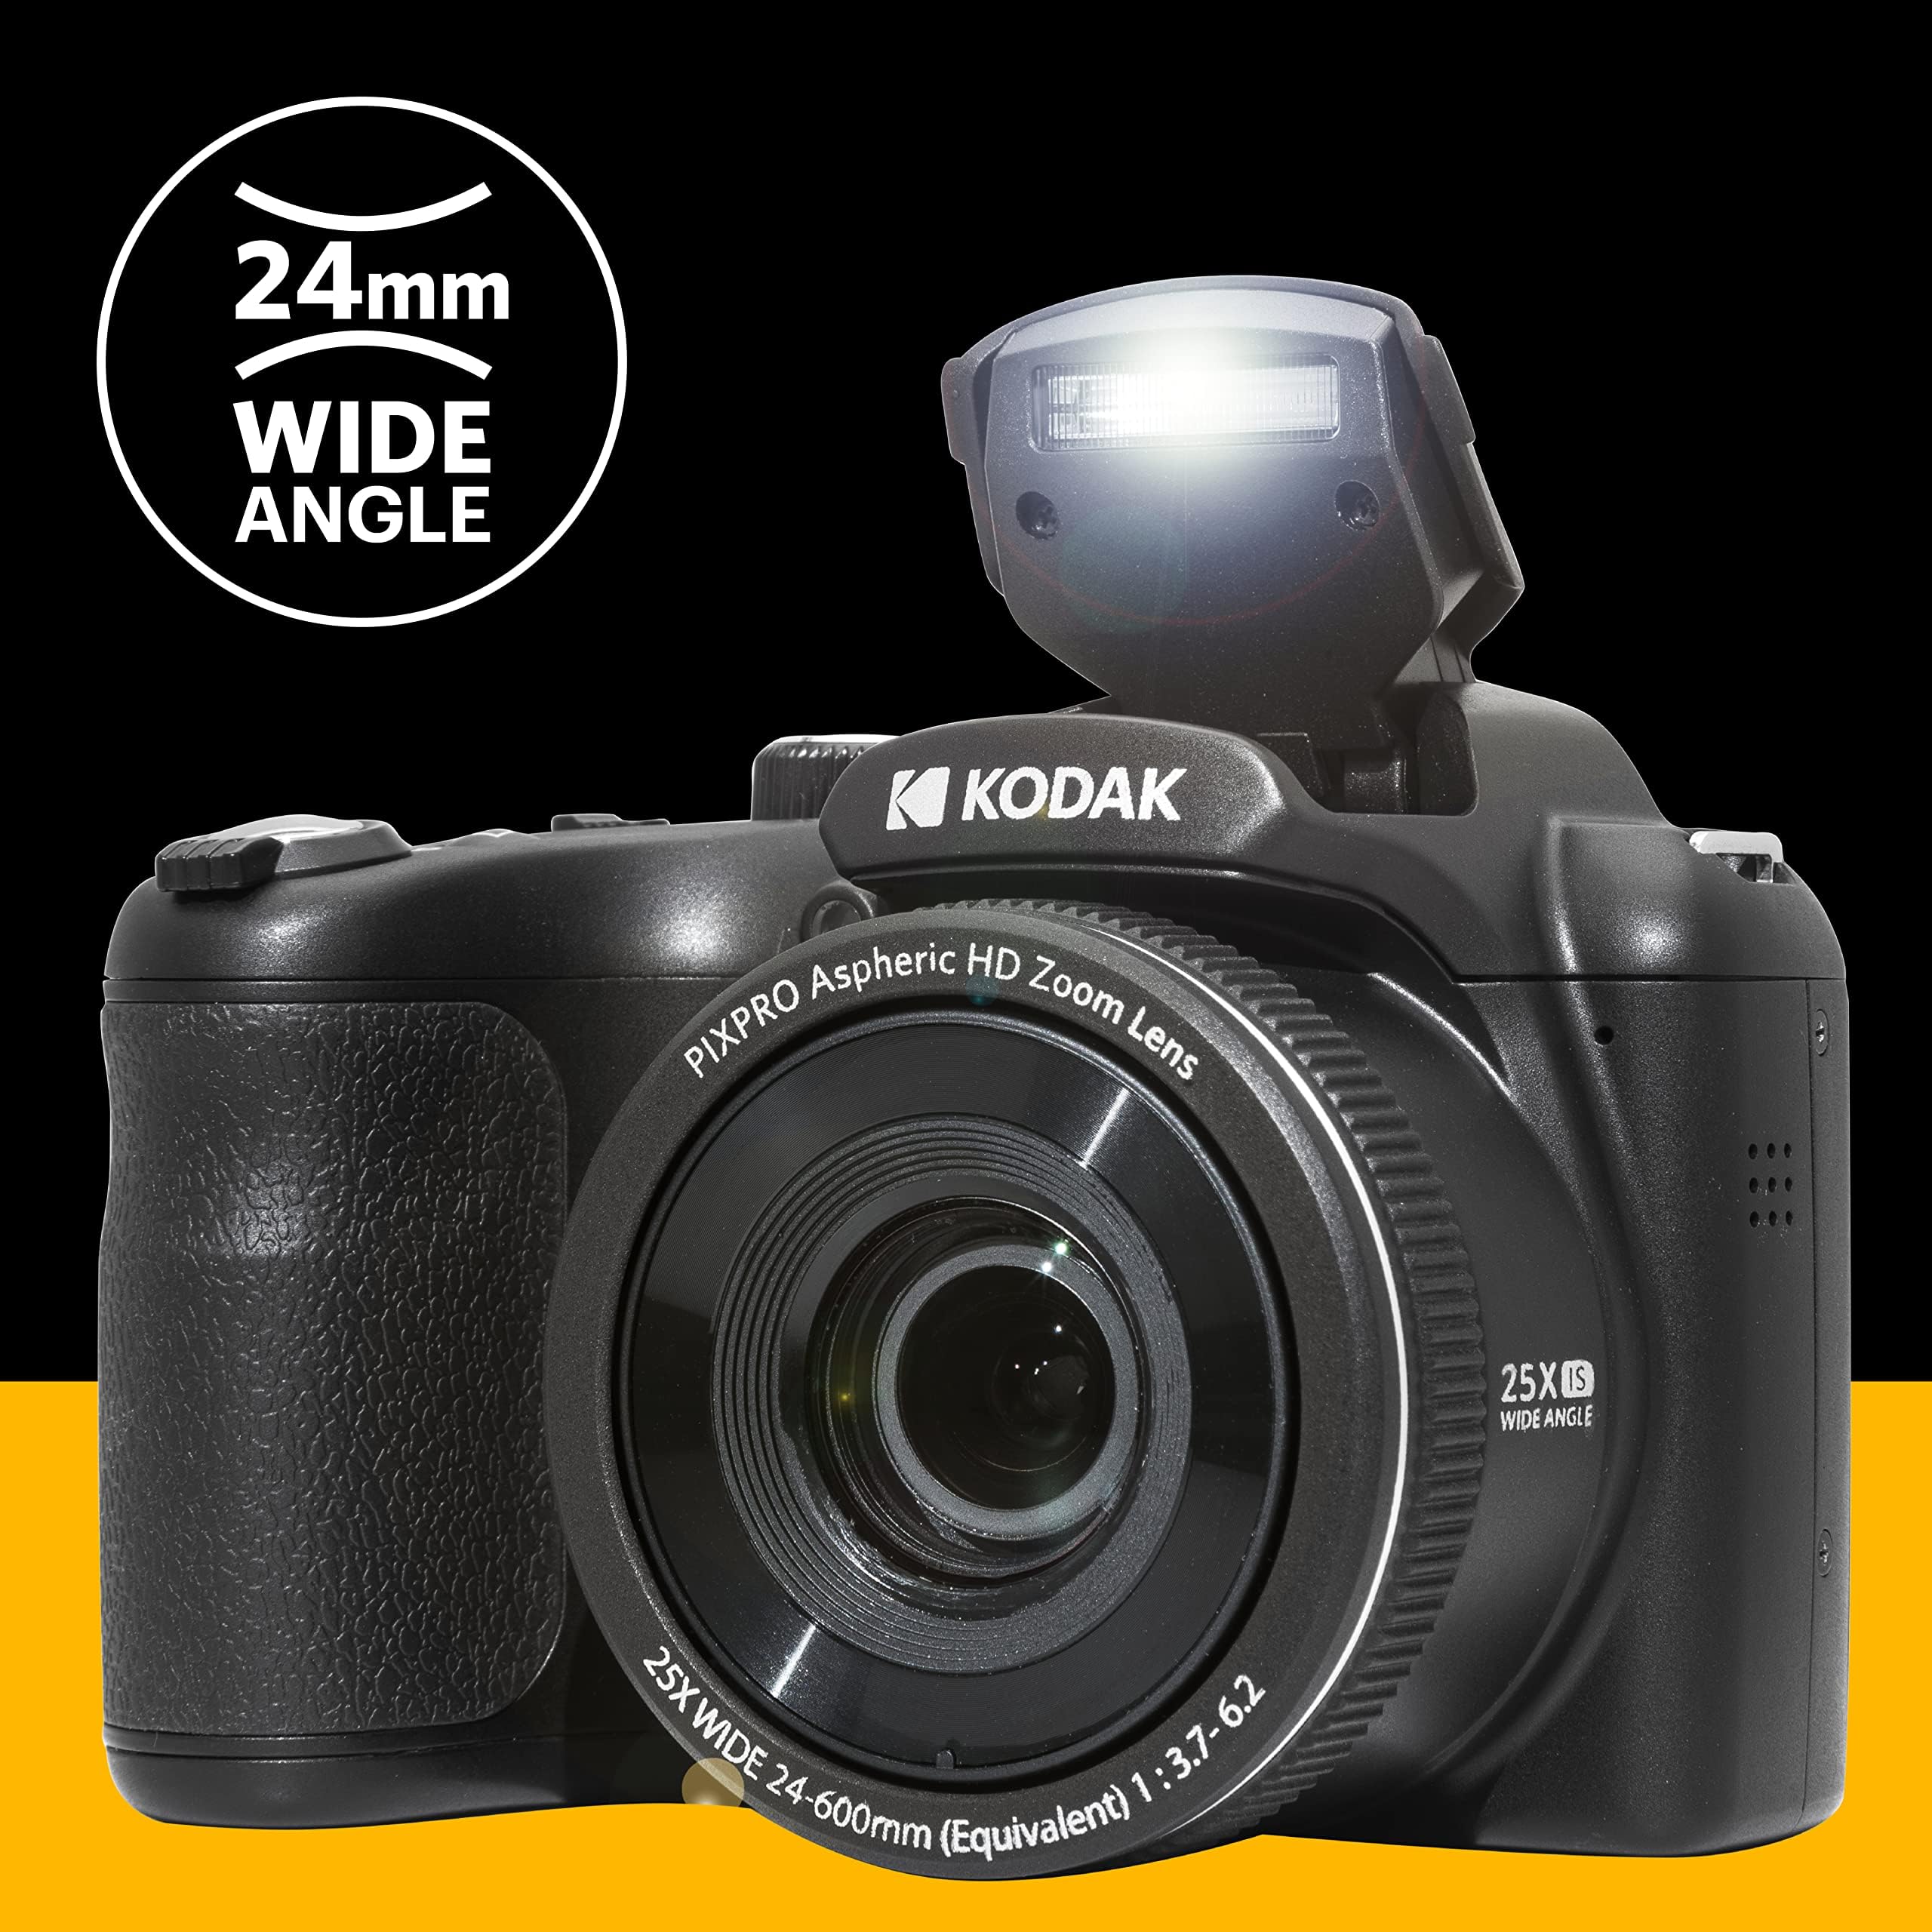 KODAK PIXPRO AZ255-BK 16MP Digital Camera 25X Optical Zoom 24mm Wide Angle Lens Optical Image Stabilization 1080P Full HD Video 3